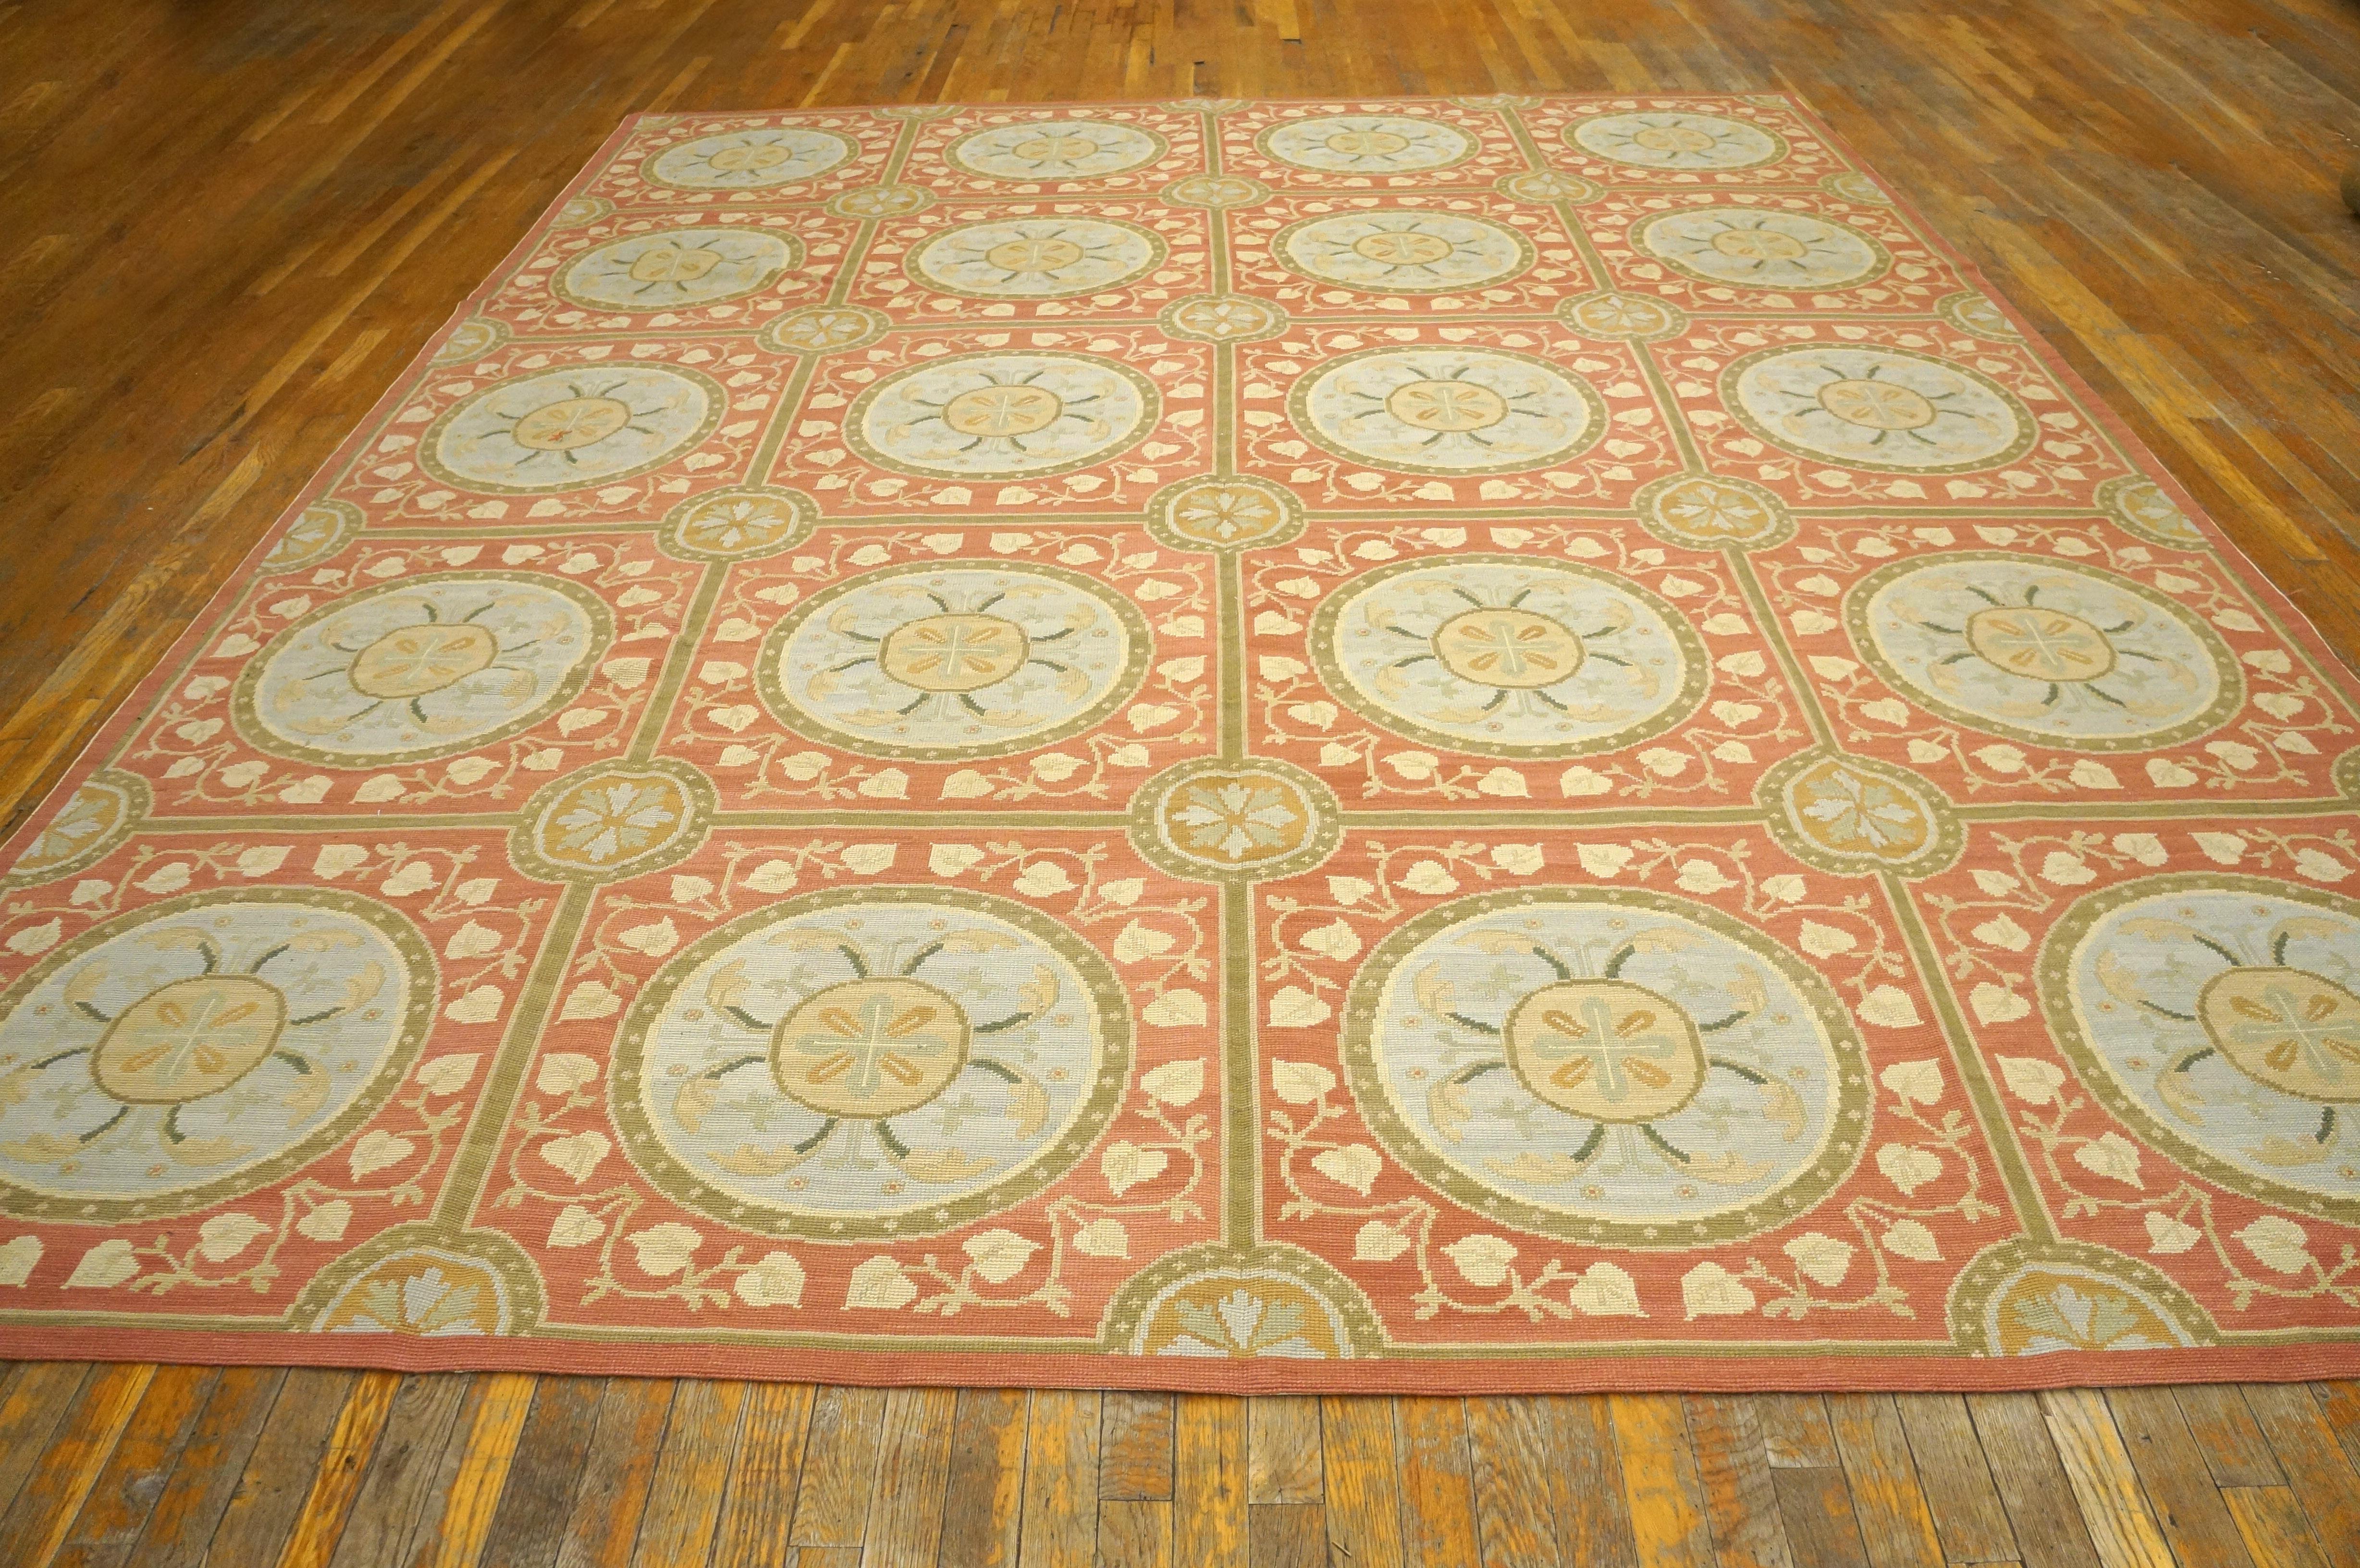 Contemporaneity Handwoven Needlepoint Flat Weave Carpet With Silk Highlights ( 9' x 12' - 275 x 365 cm)
